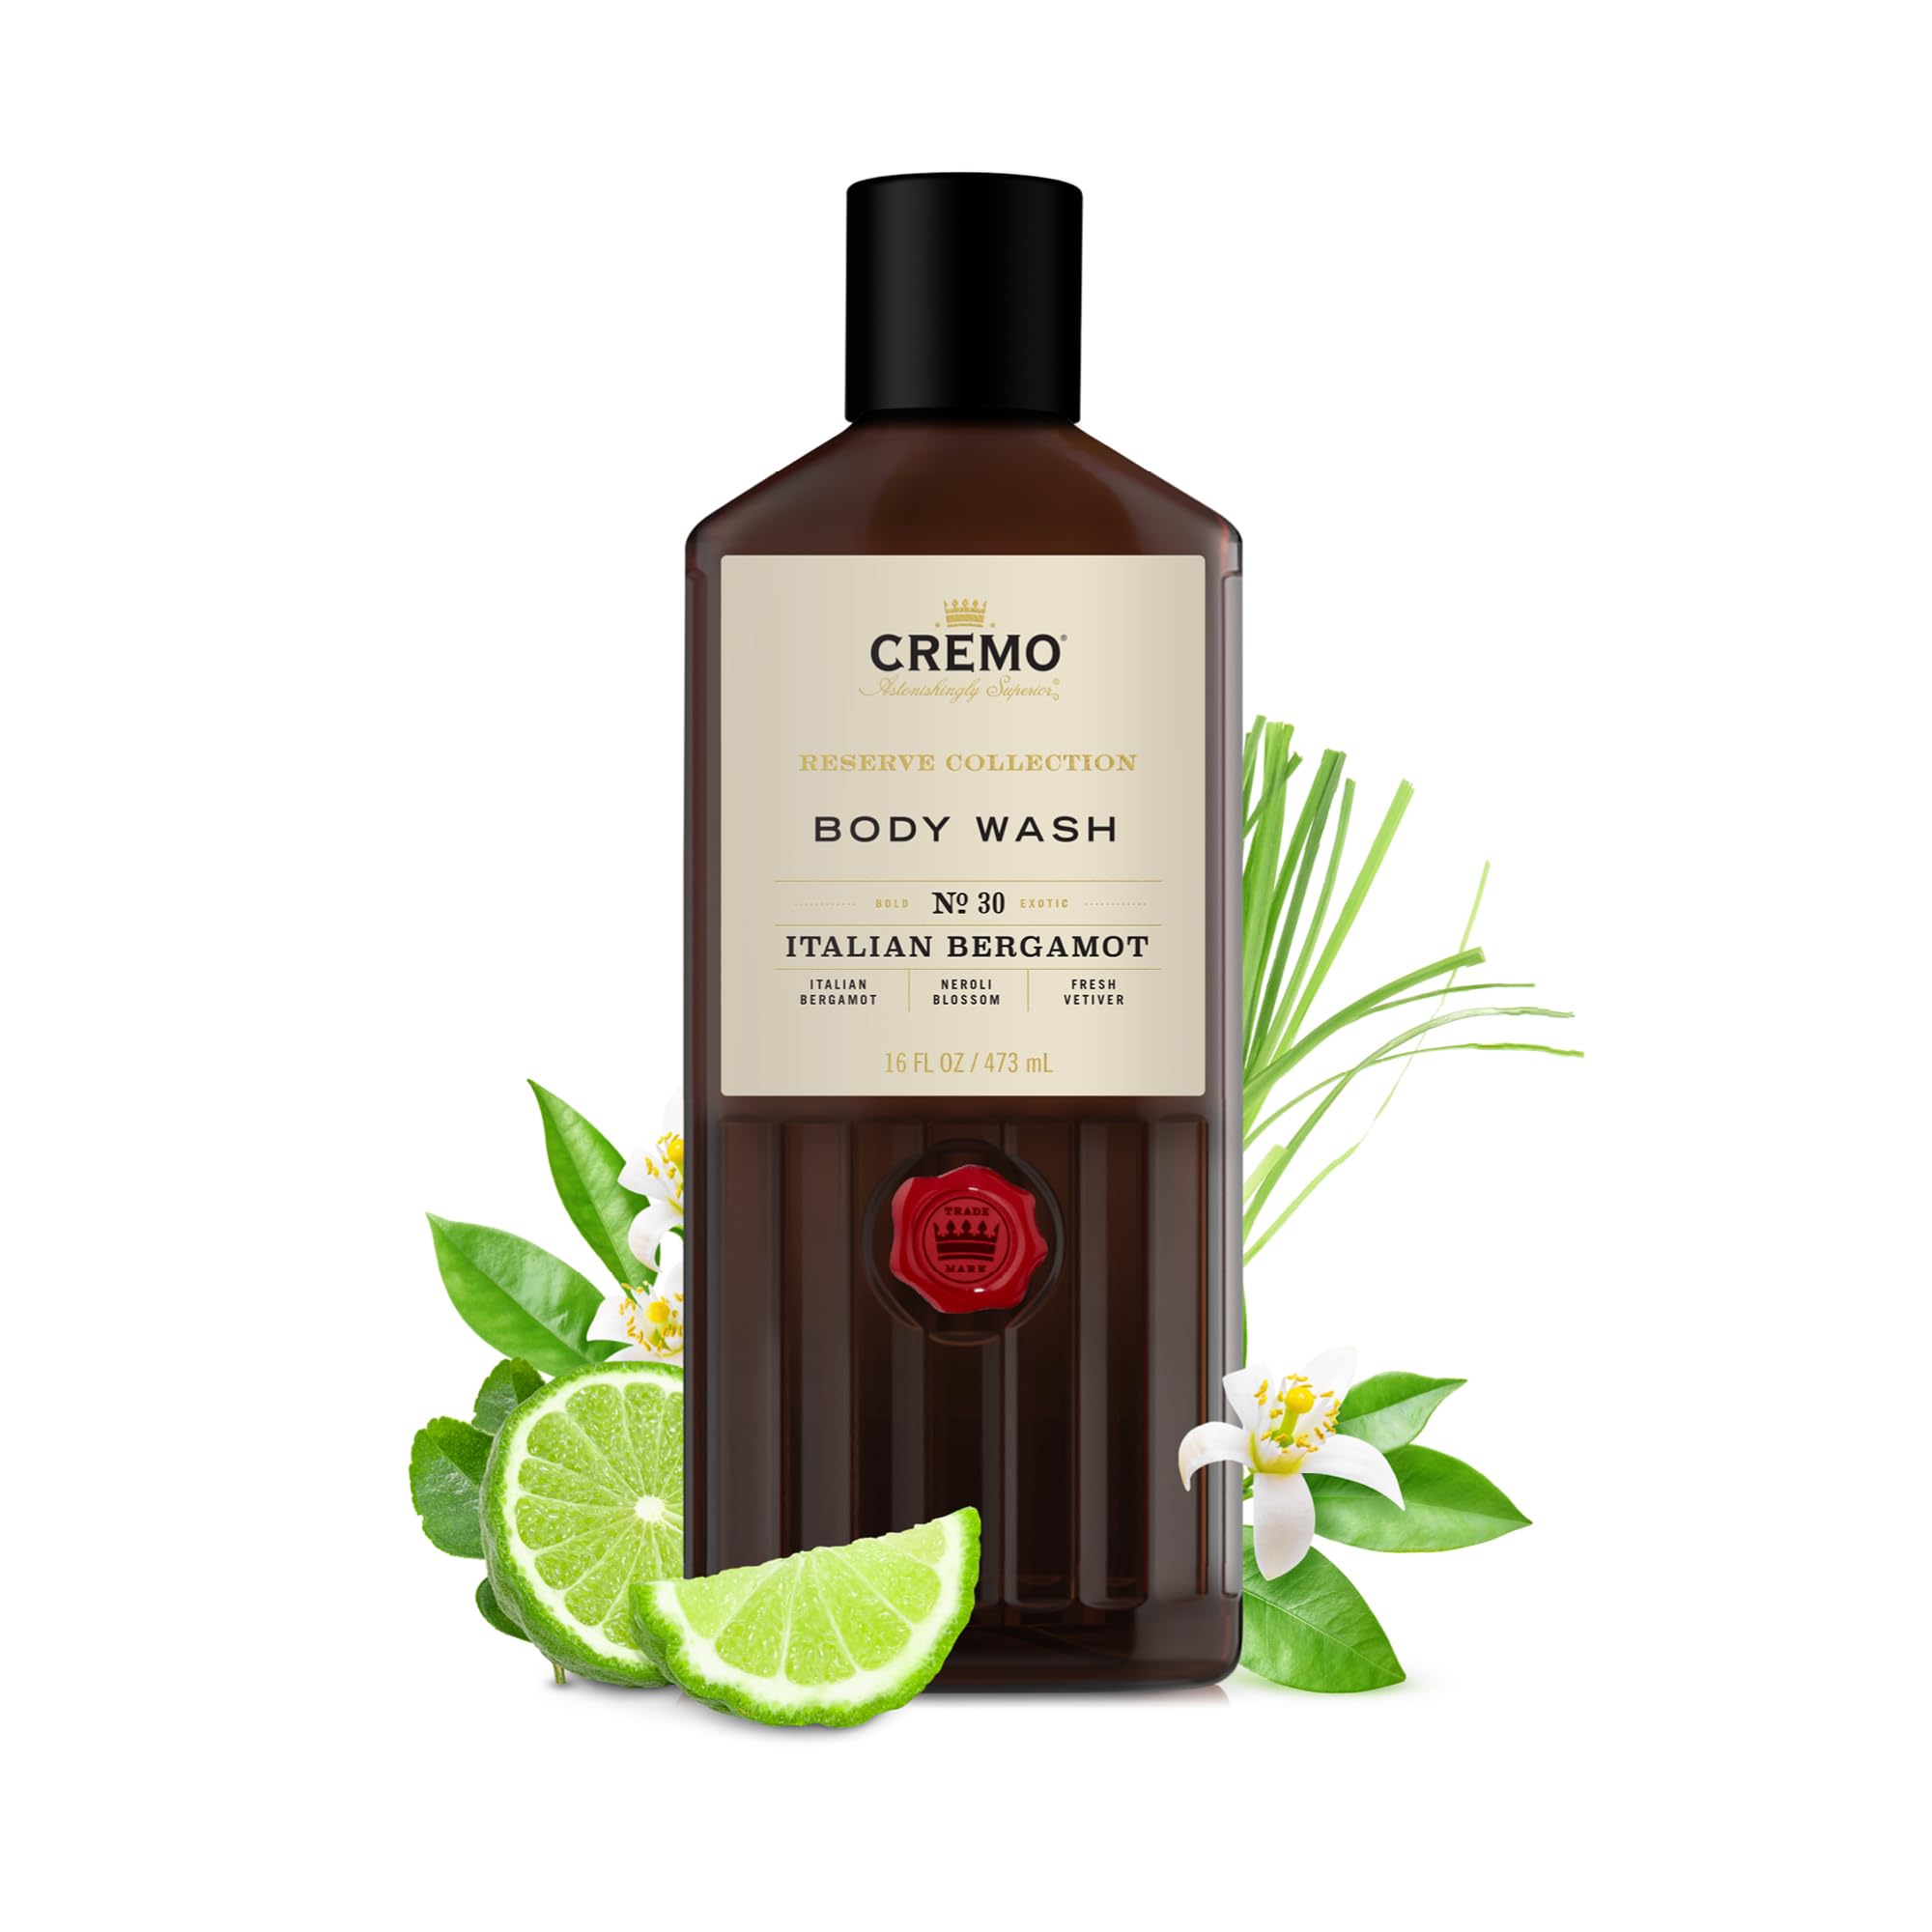 Cremo Rich-Lathering Italian Bergamot Body Wash, Notes of Italian Bergamot, Neroli Blossom, and Fresh Vetiver, 16 Fl Oz